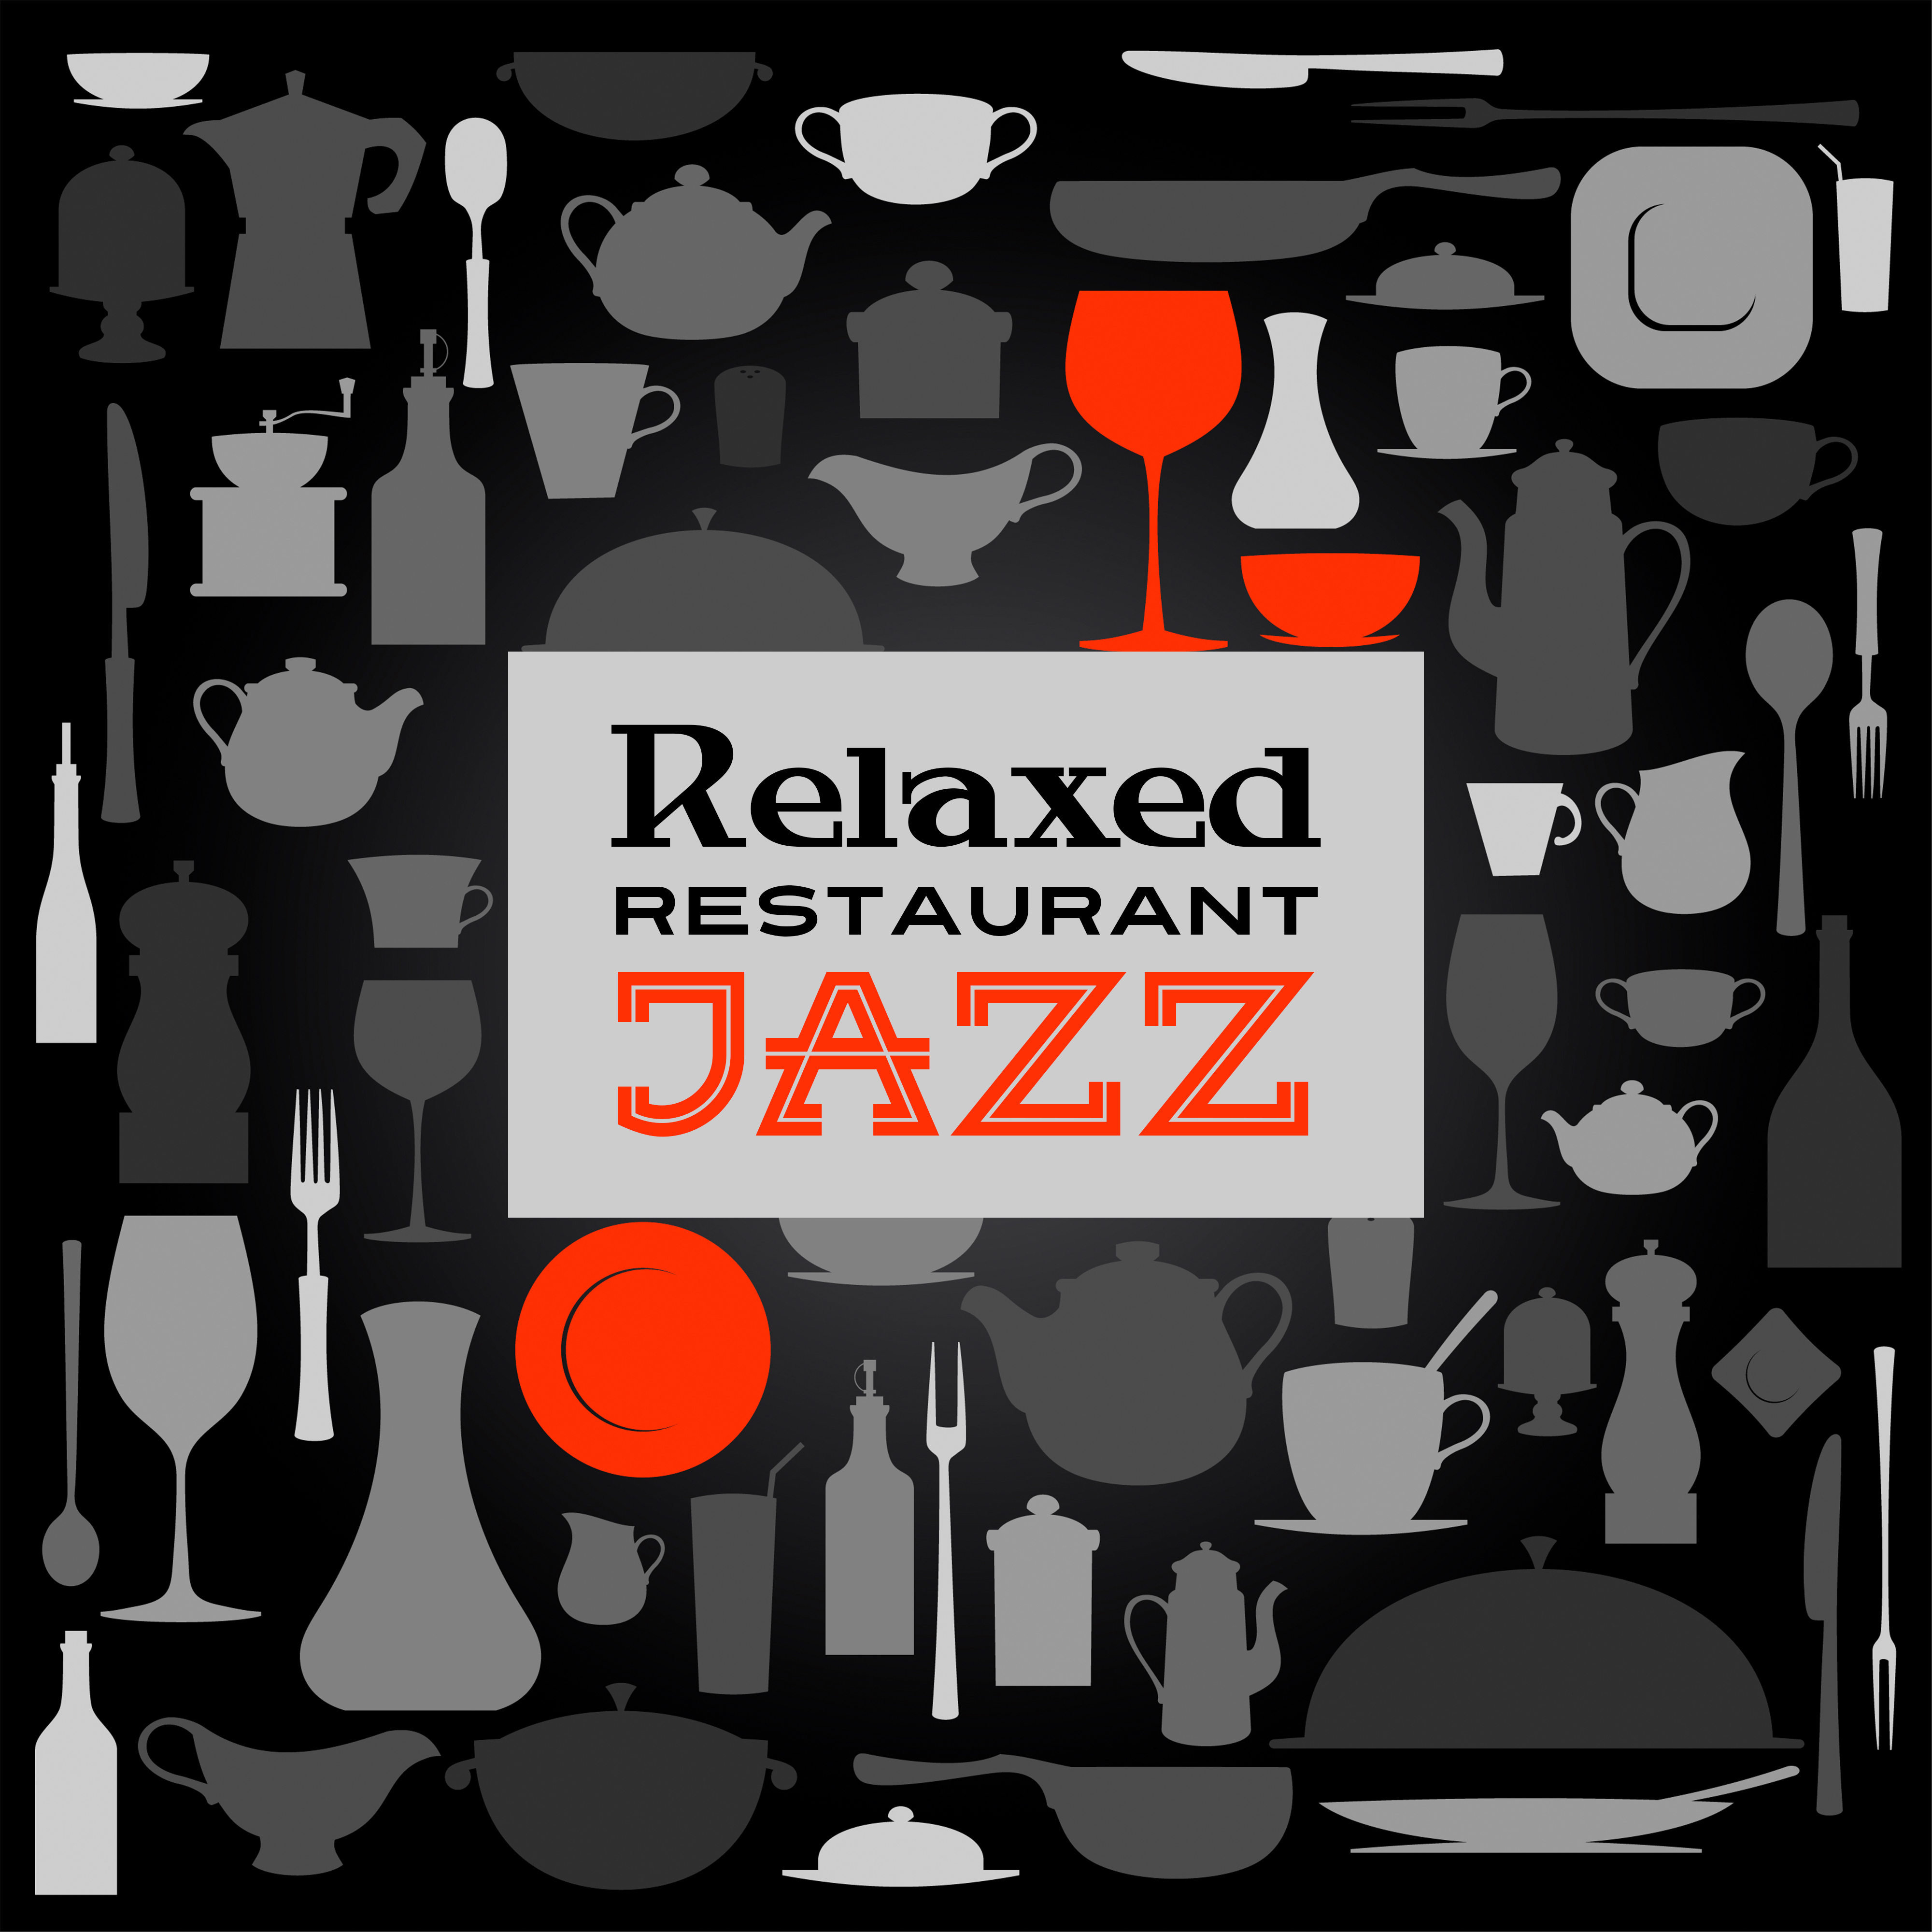 Relaxed Restaurant Jazz